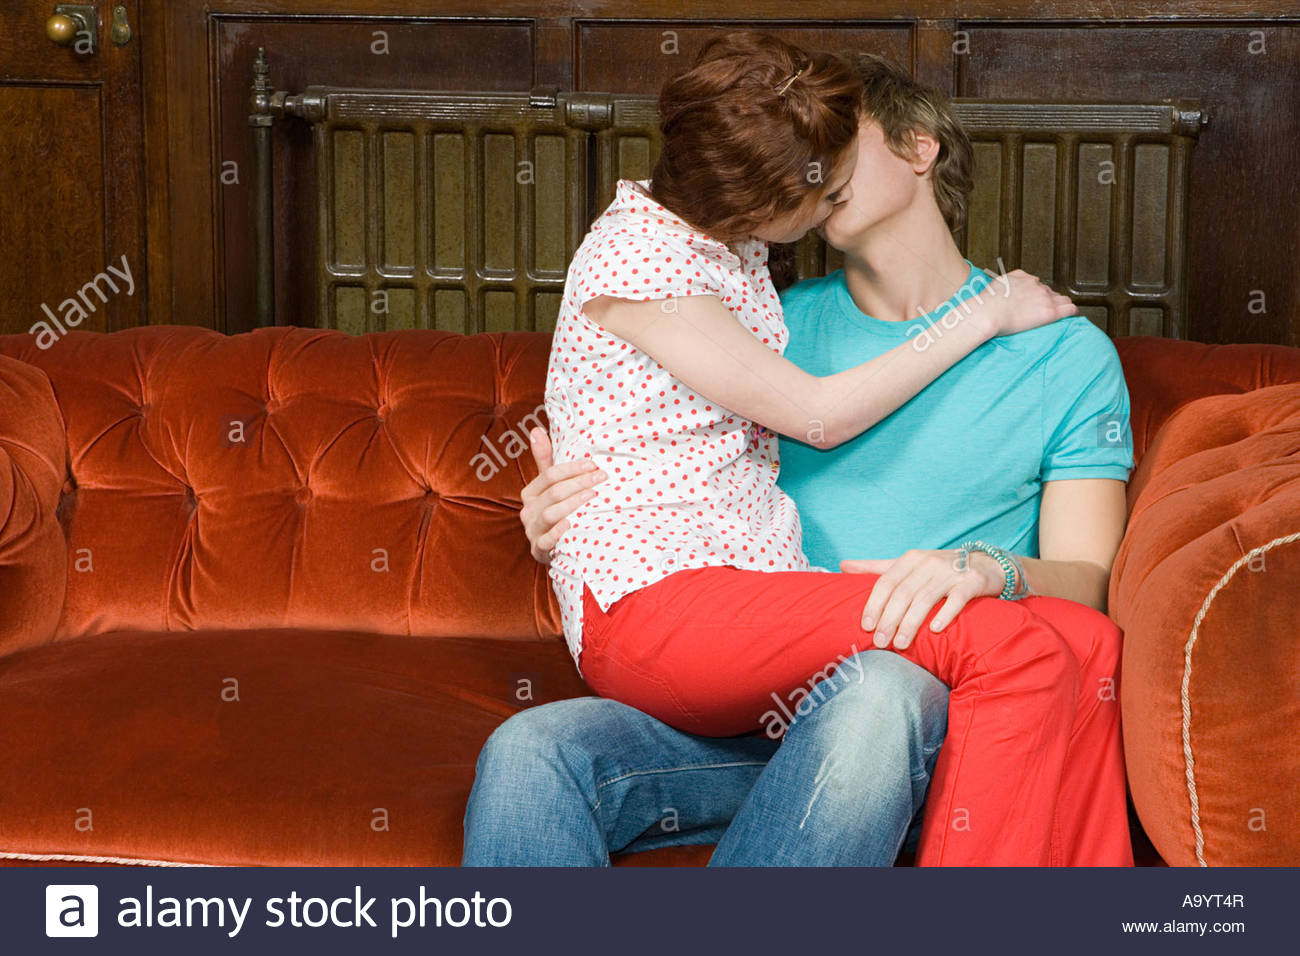 amateur teen lesbian kissing